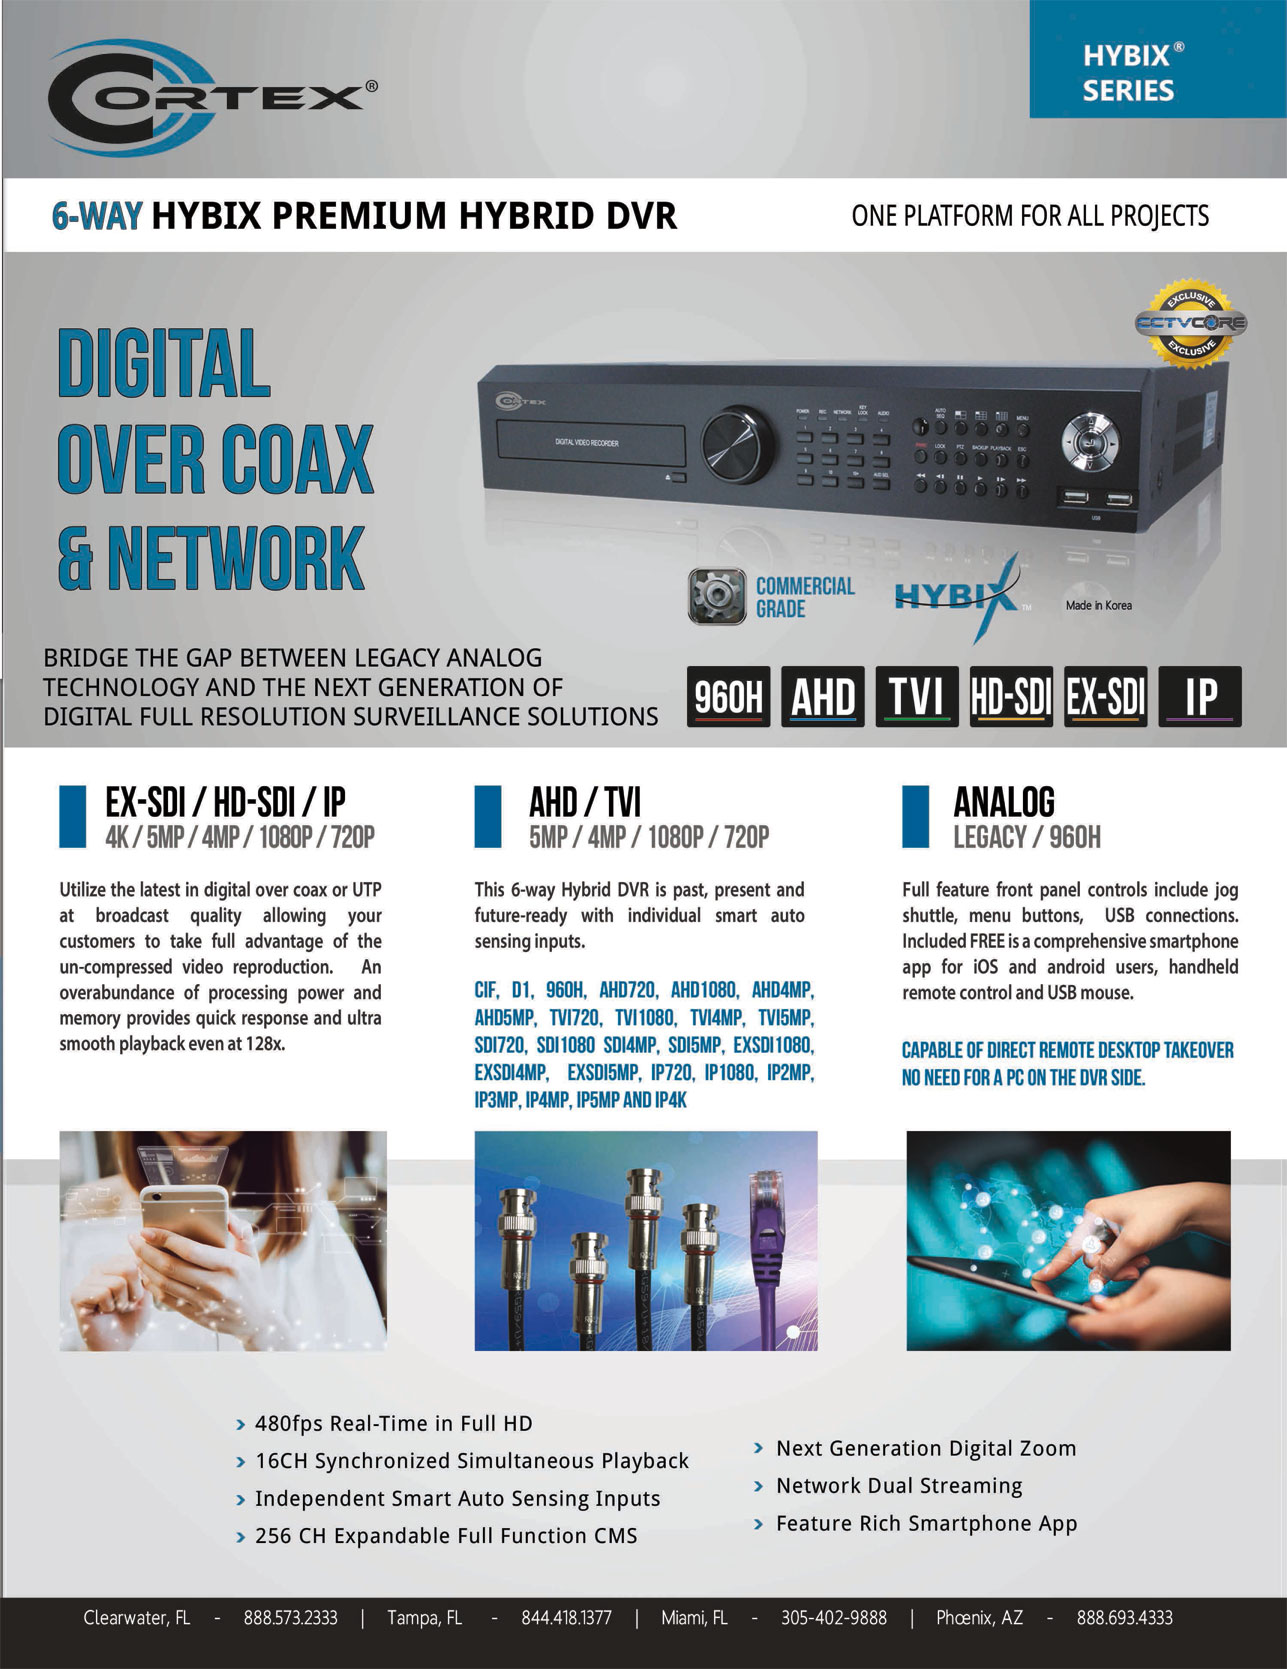 Cortex SDI (Serial Digital Interface) hybrid 4 in one security DVR/NVRs